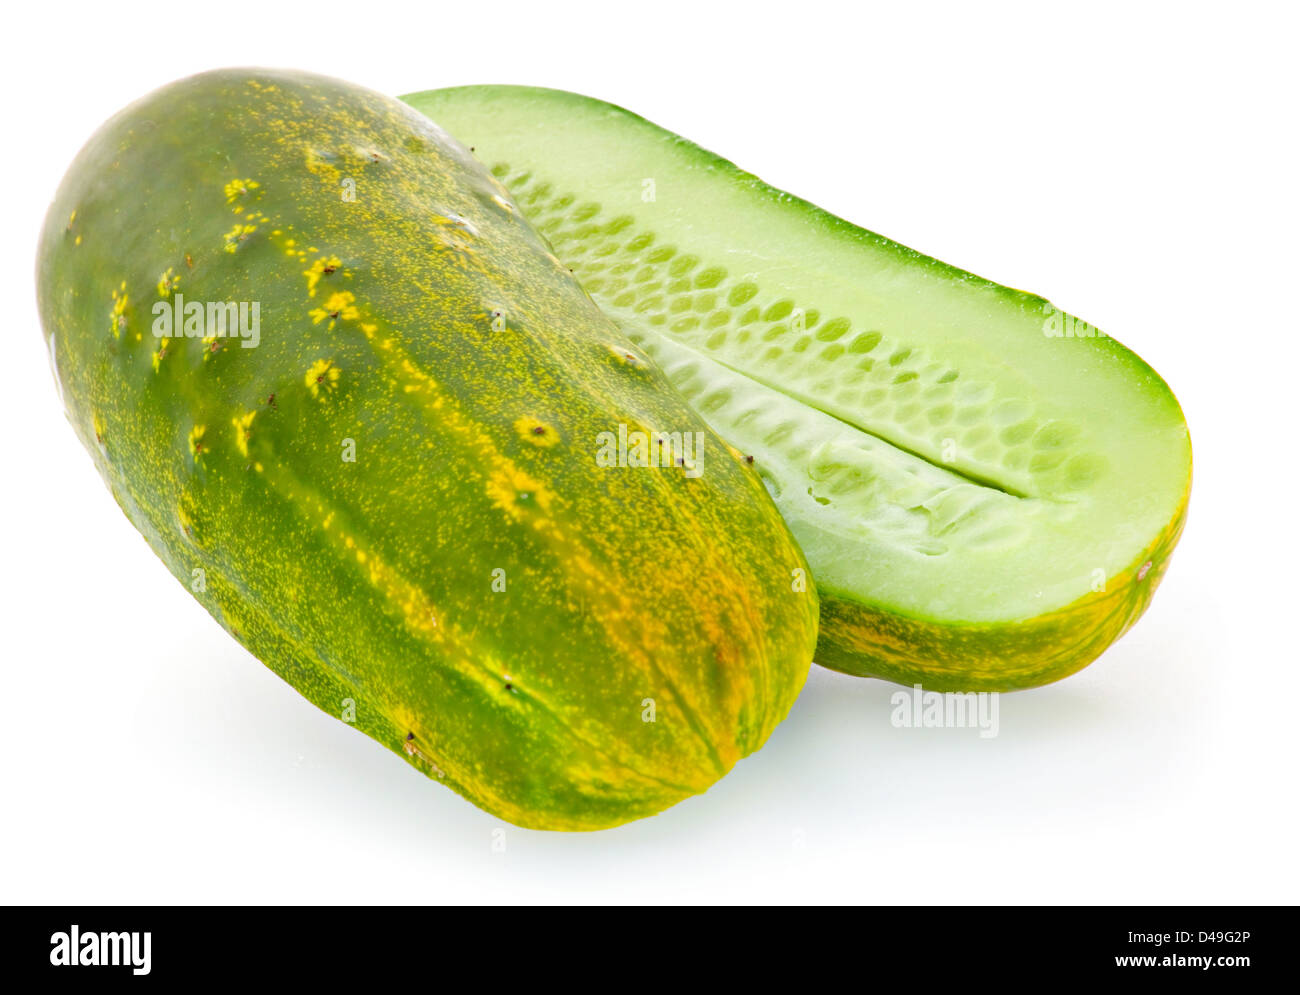 Giant cucumber overripe isolated on white background Stock Photo